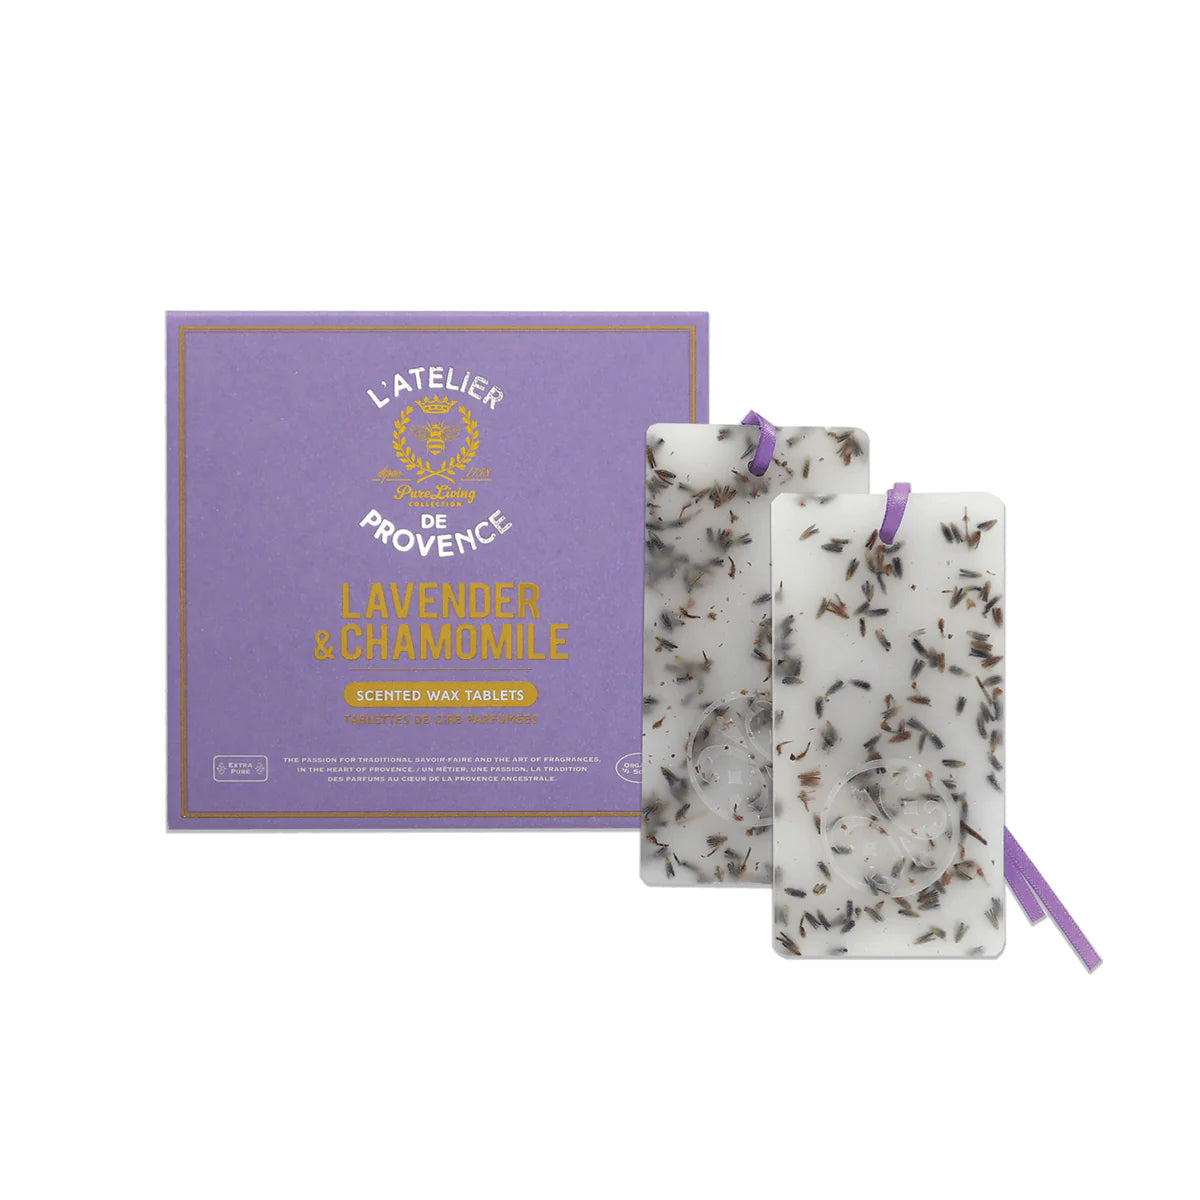 L'Atelier de Provence Lavender & Chamomile Scented Wax Tablets